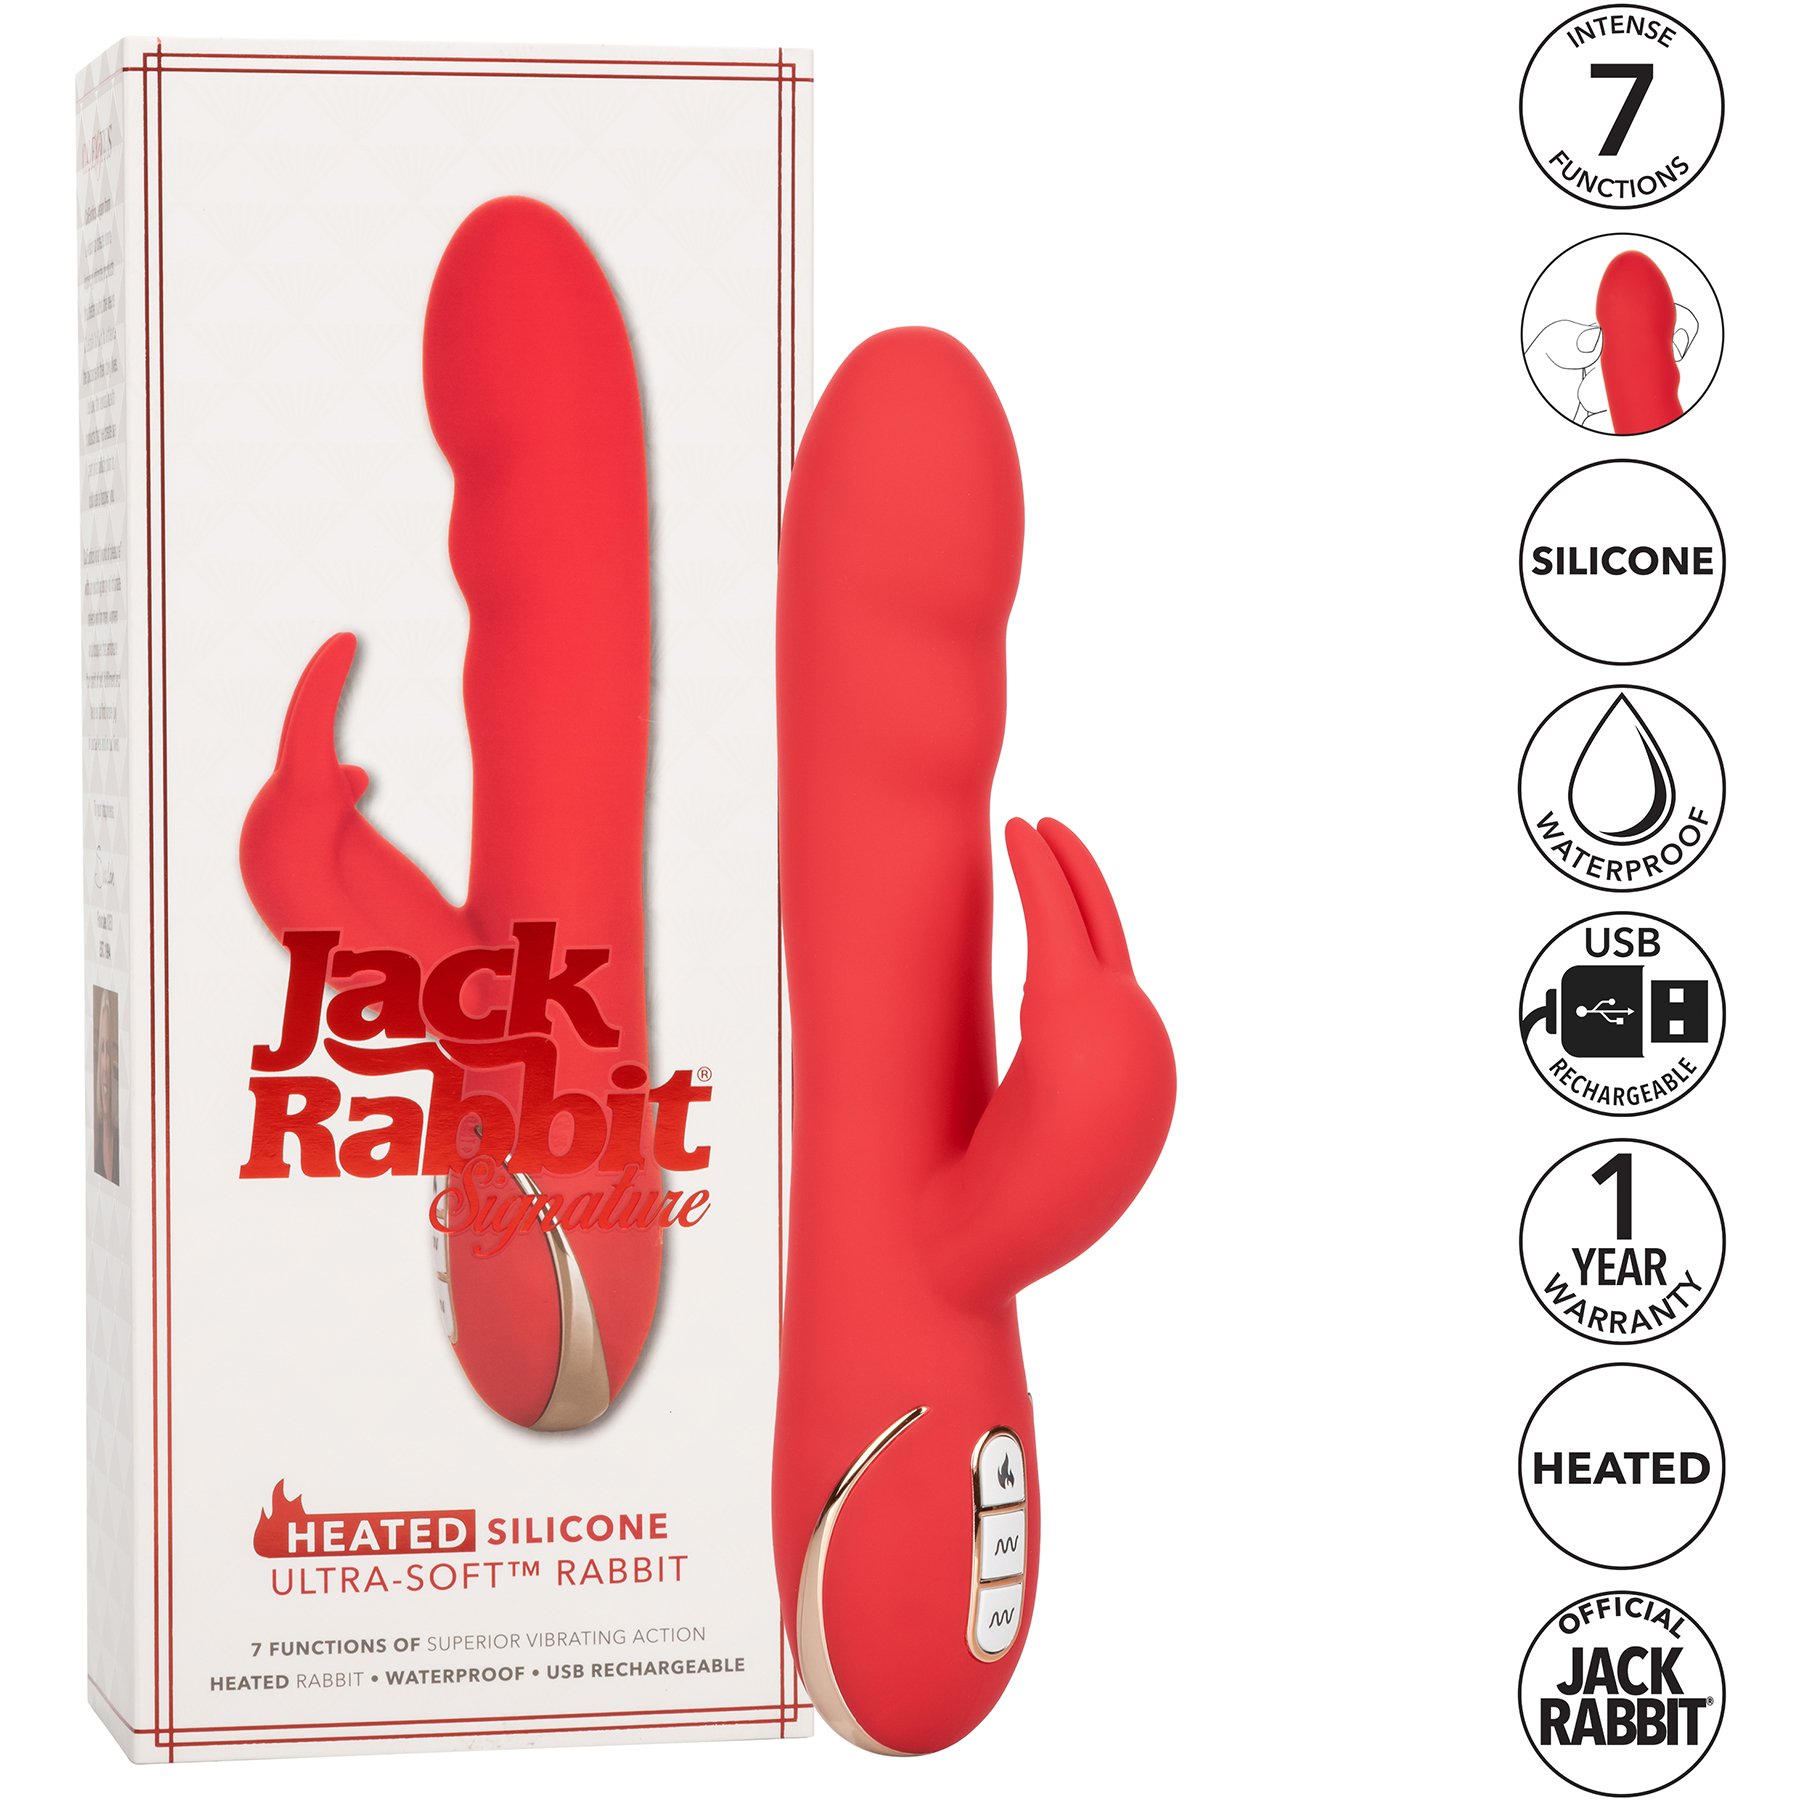 Jack Rabbit Signature Silicone Rabbit Rechargeable Vibrator - Features